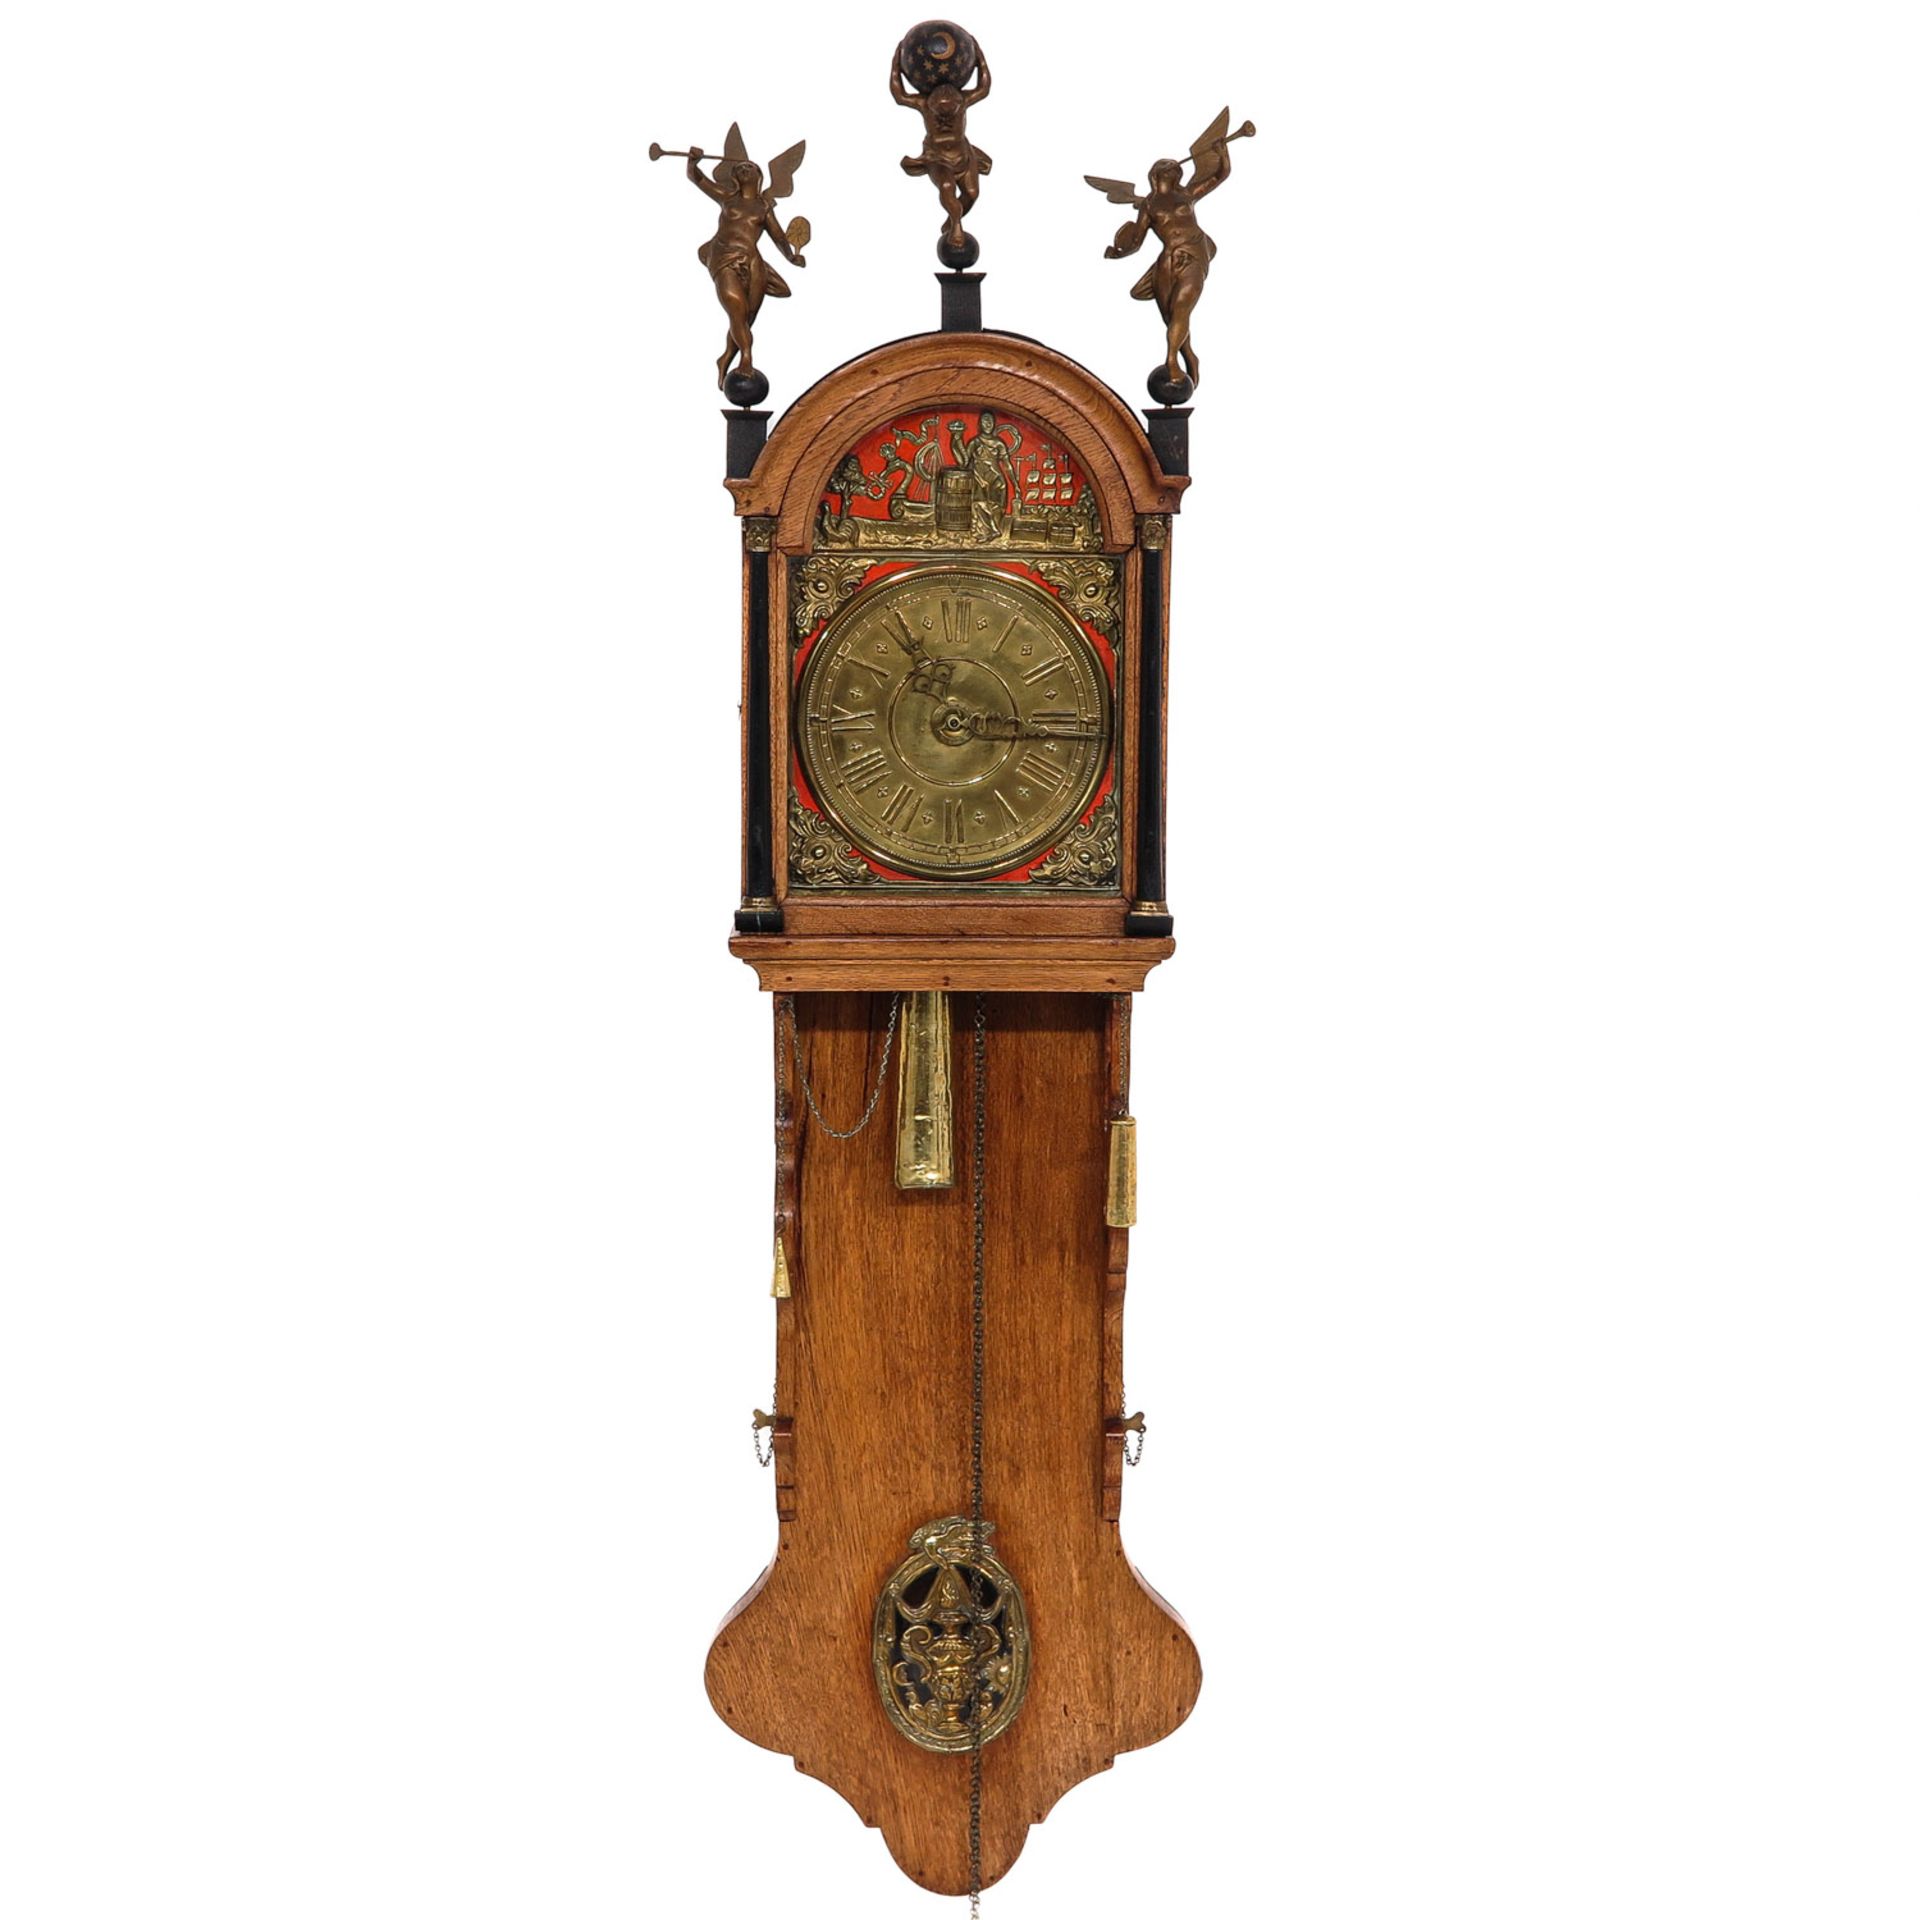 A 19th Century Dutch Wall Clock or Staartklok